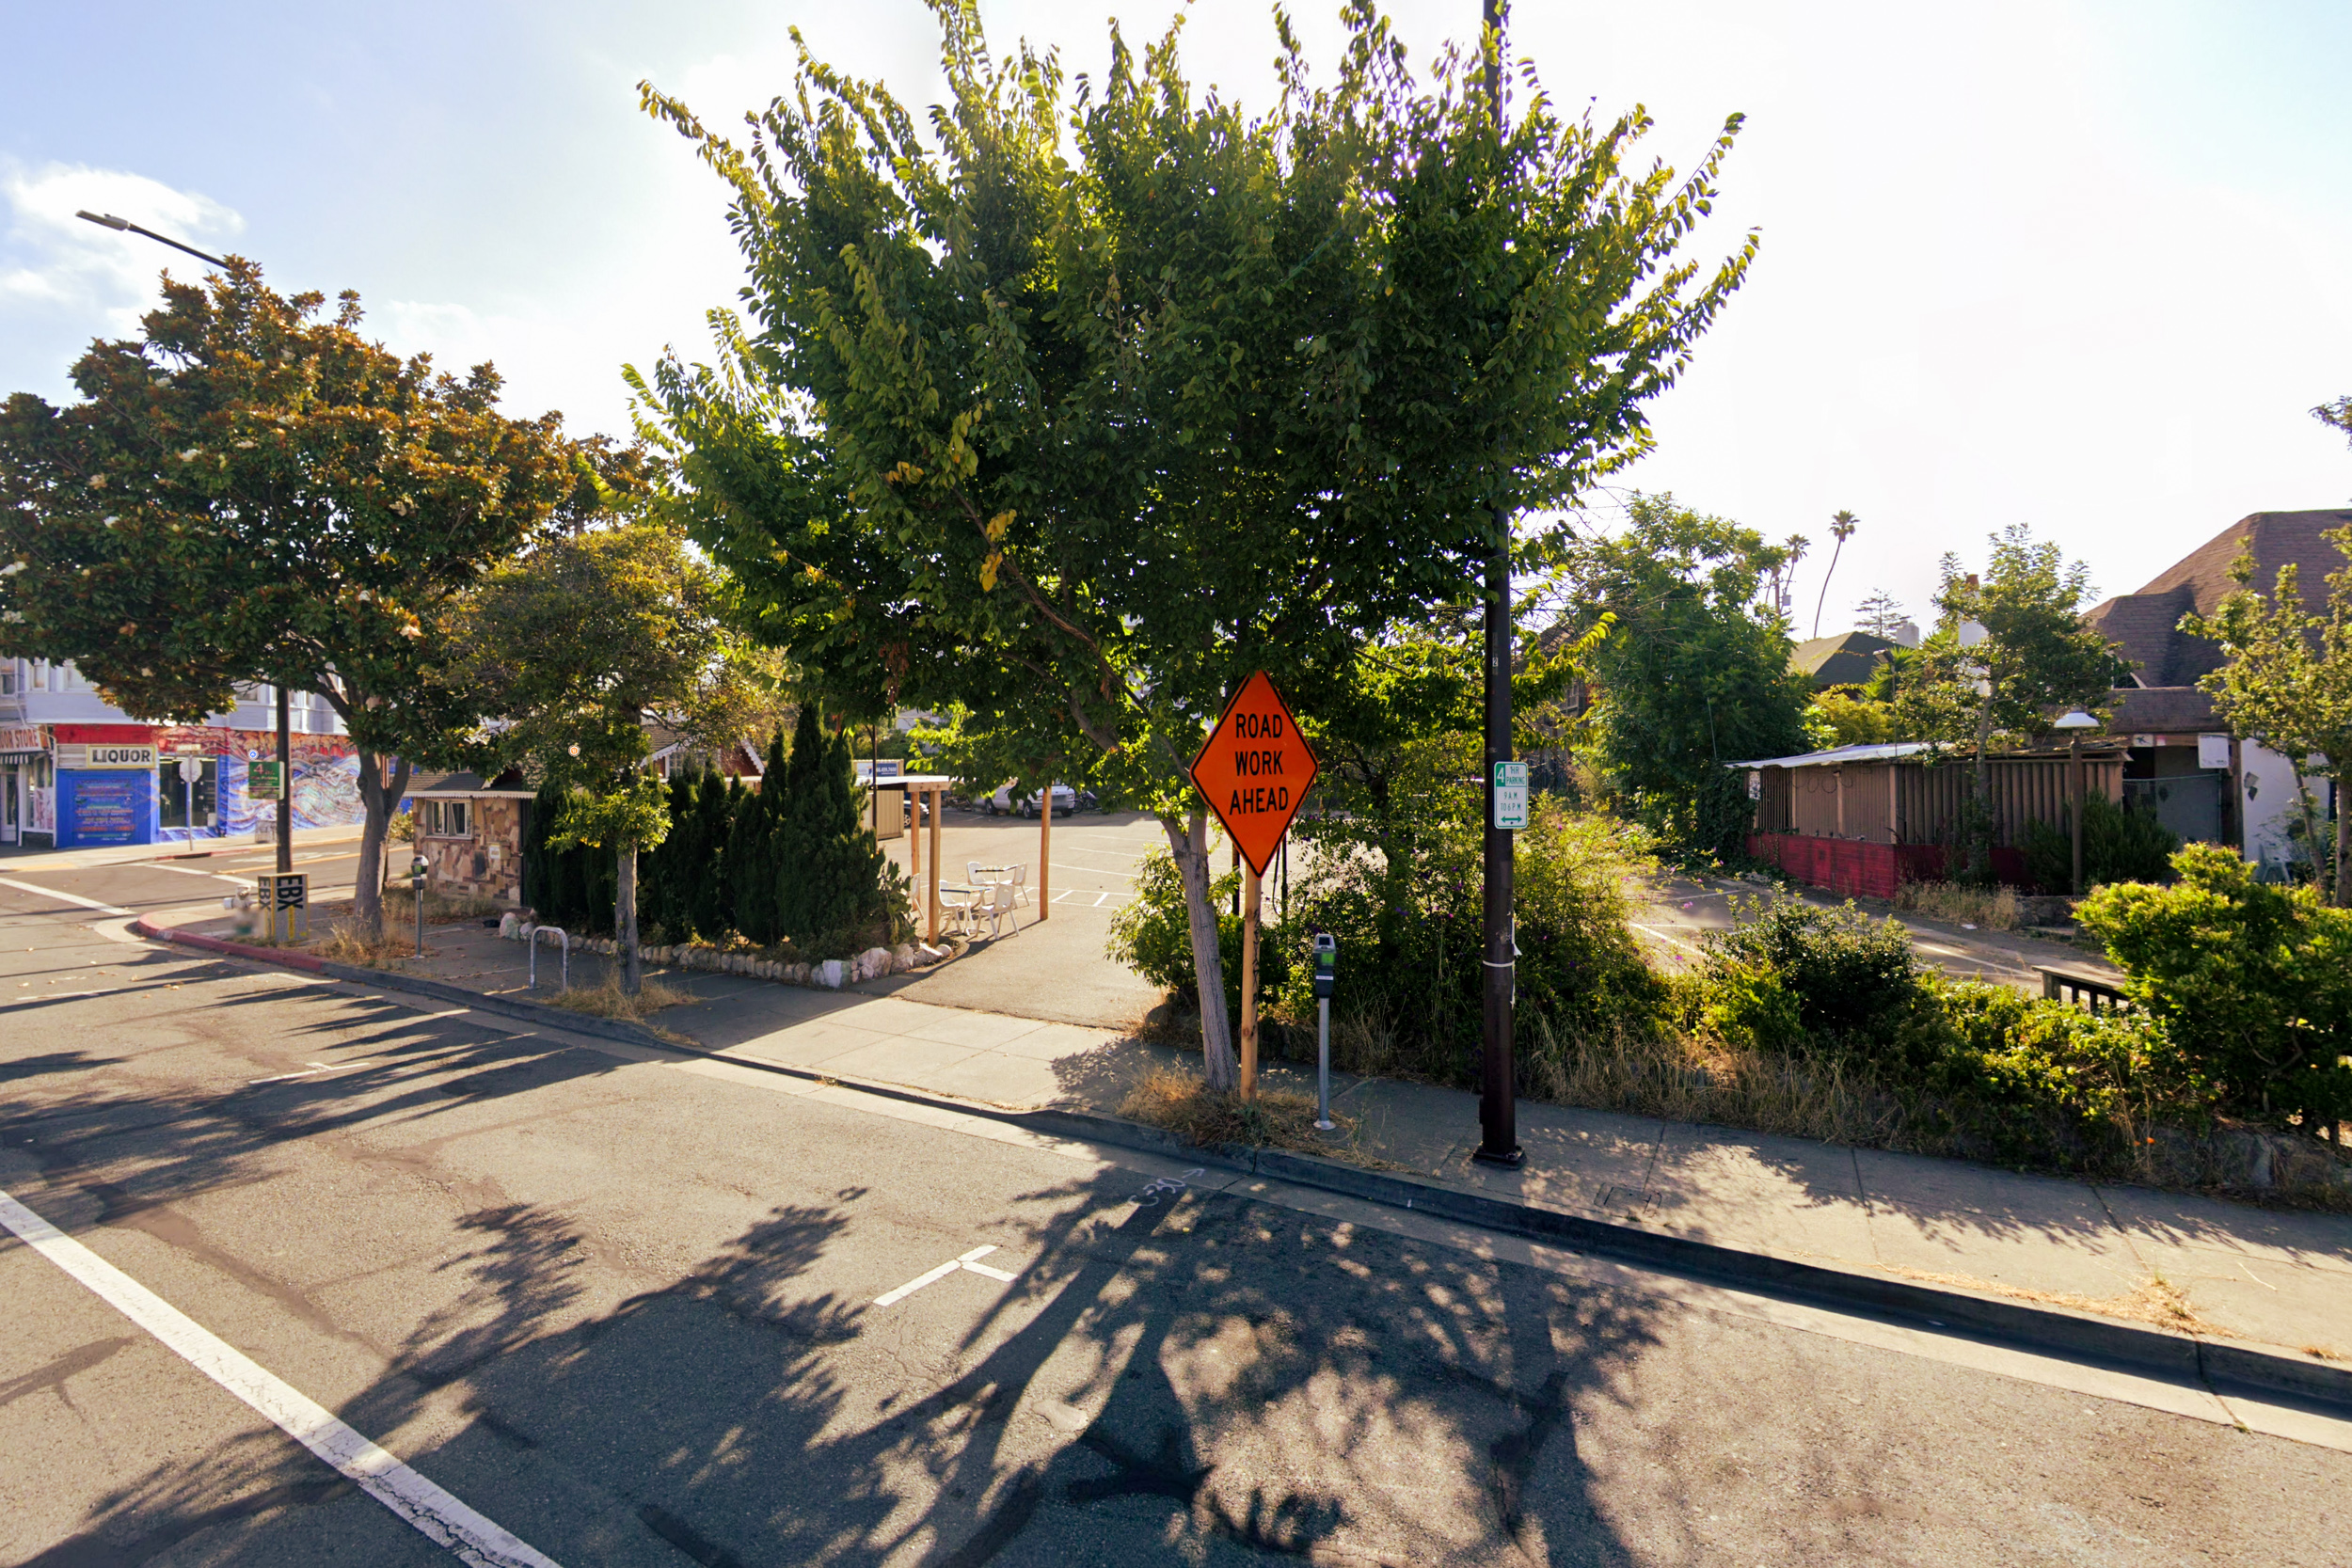 3031 Adeline Street, image via Google Street View